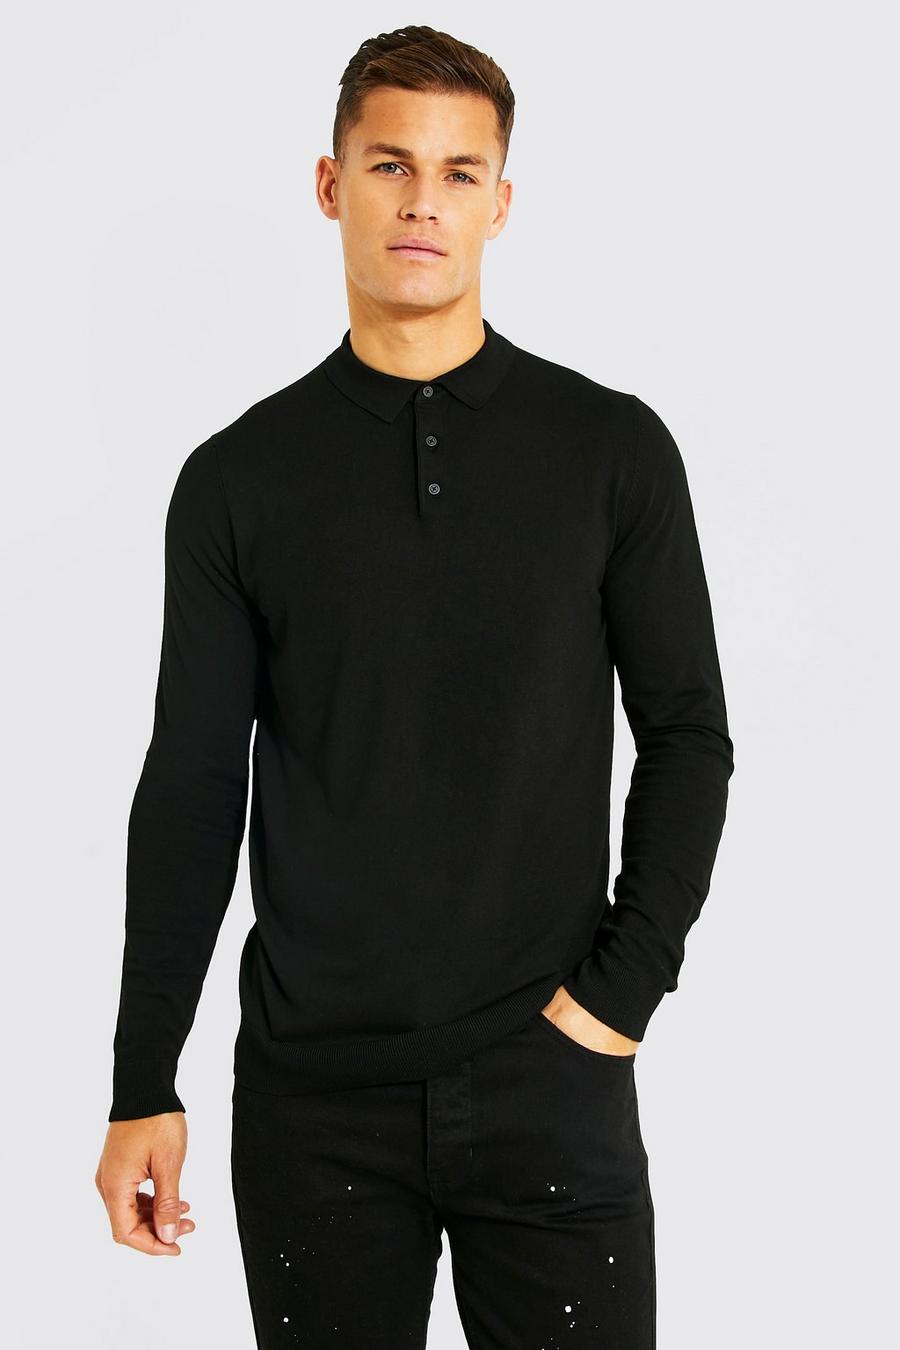 Black negro חולצת פולו סרוגה מבד ממוחזר עם שרוולים ארוכים, לגברים גבוהים